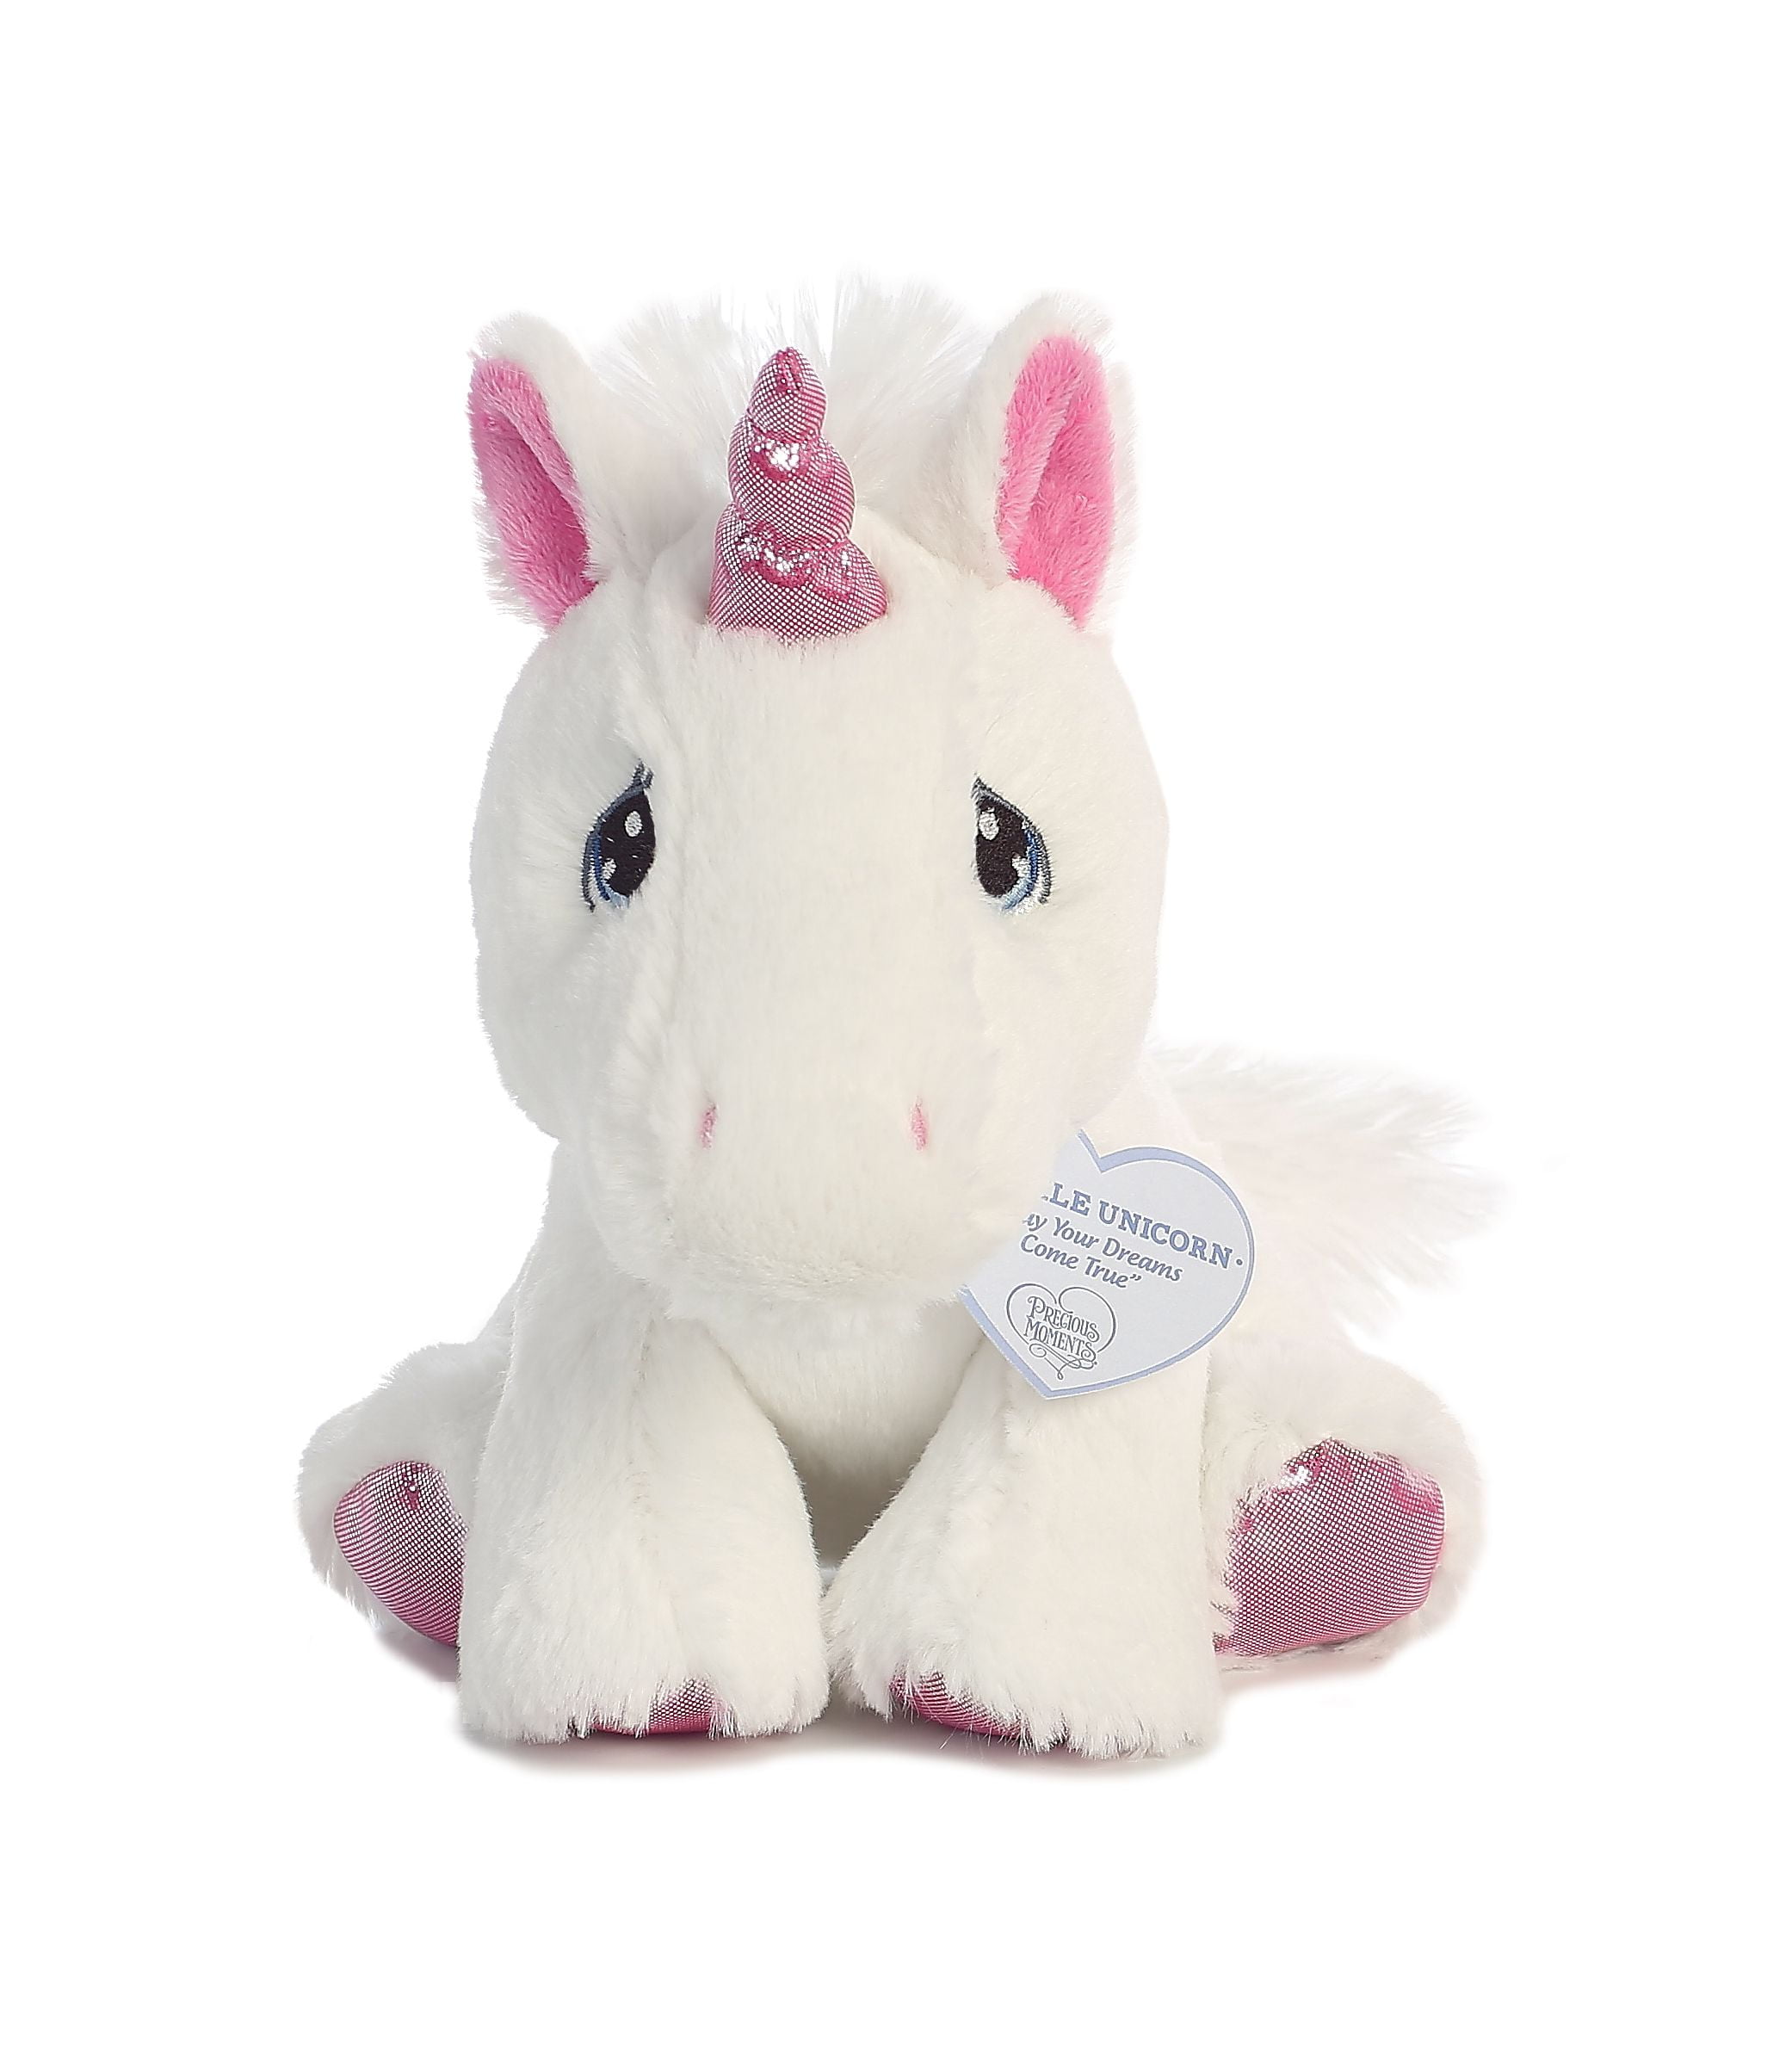 Sparkle Unicorn 8.5" Aurora Precious Moments Soft Plush Animal White with Pink 